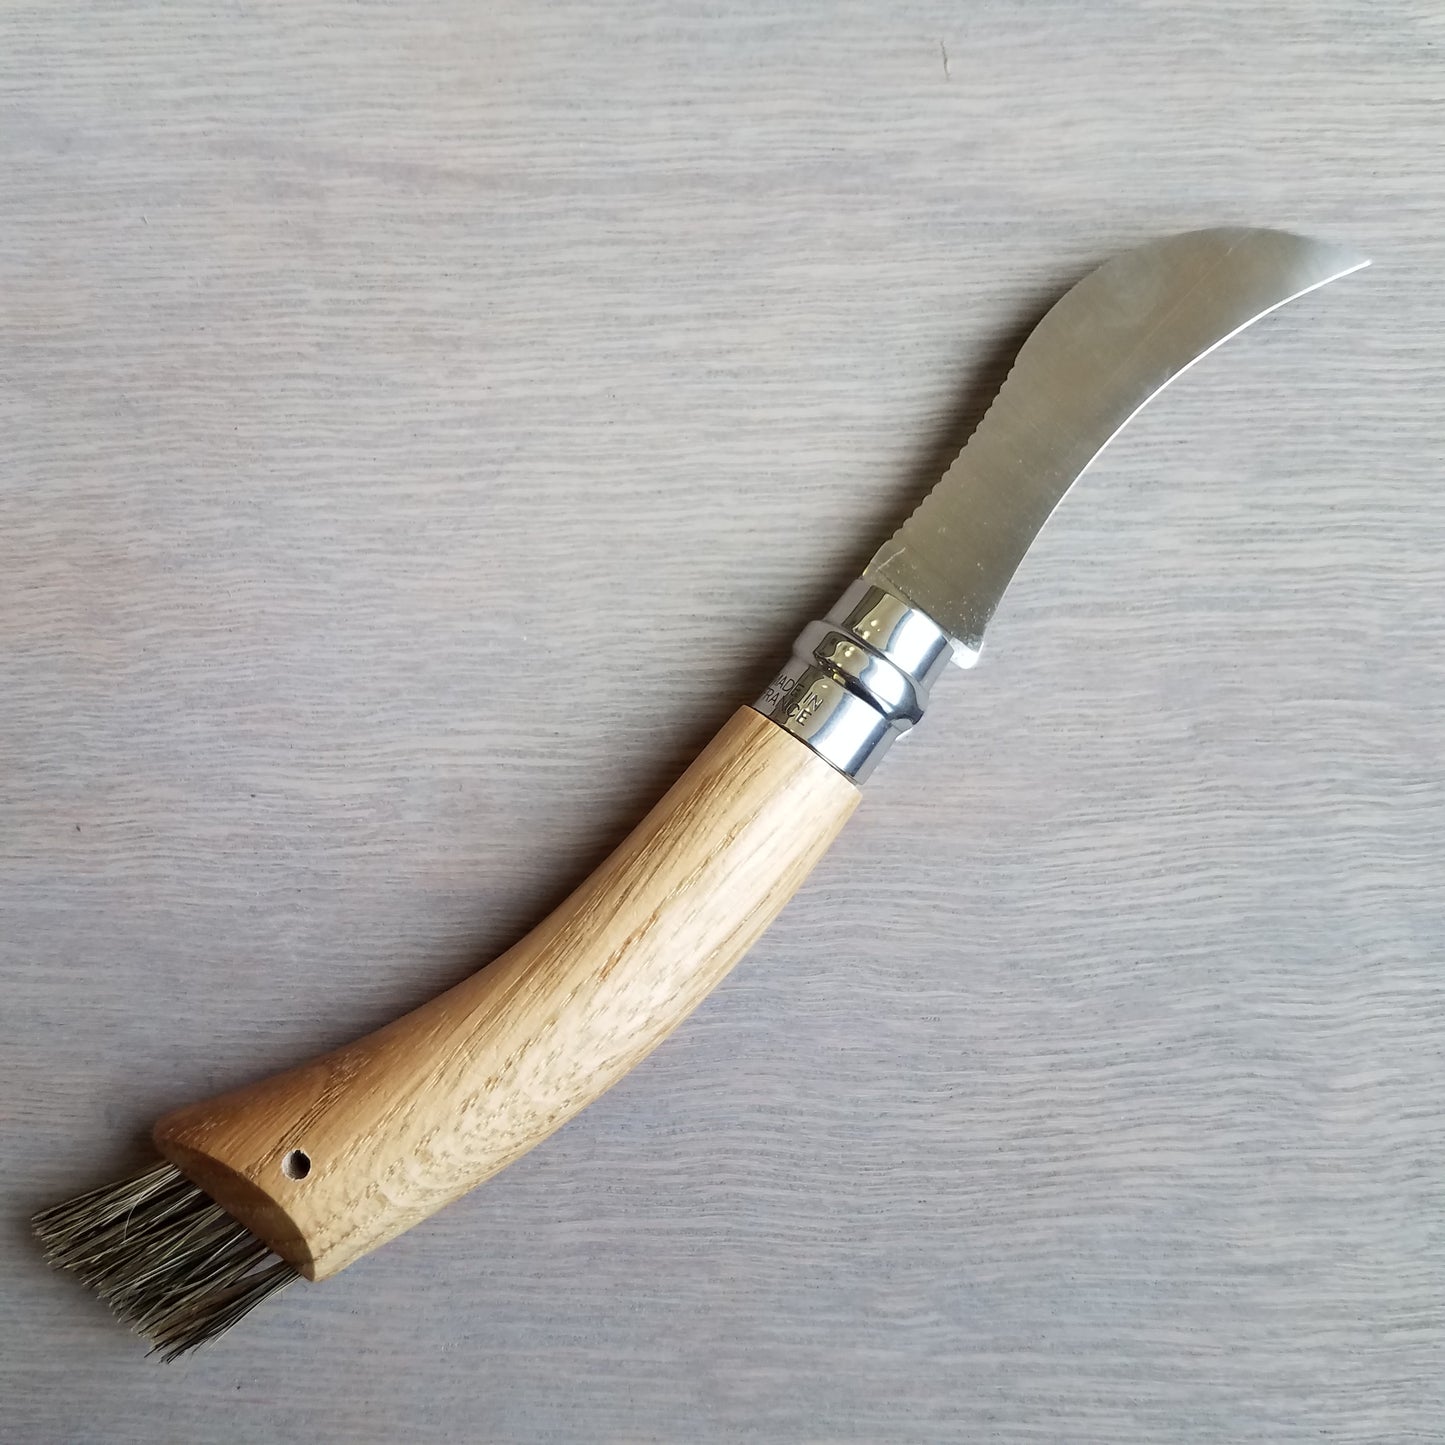 No. 8 Mushroom Knife + Sheath Gift Box by Opinel